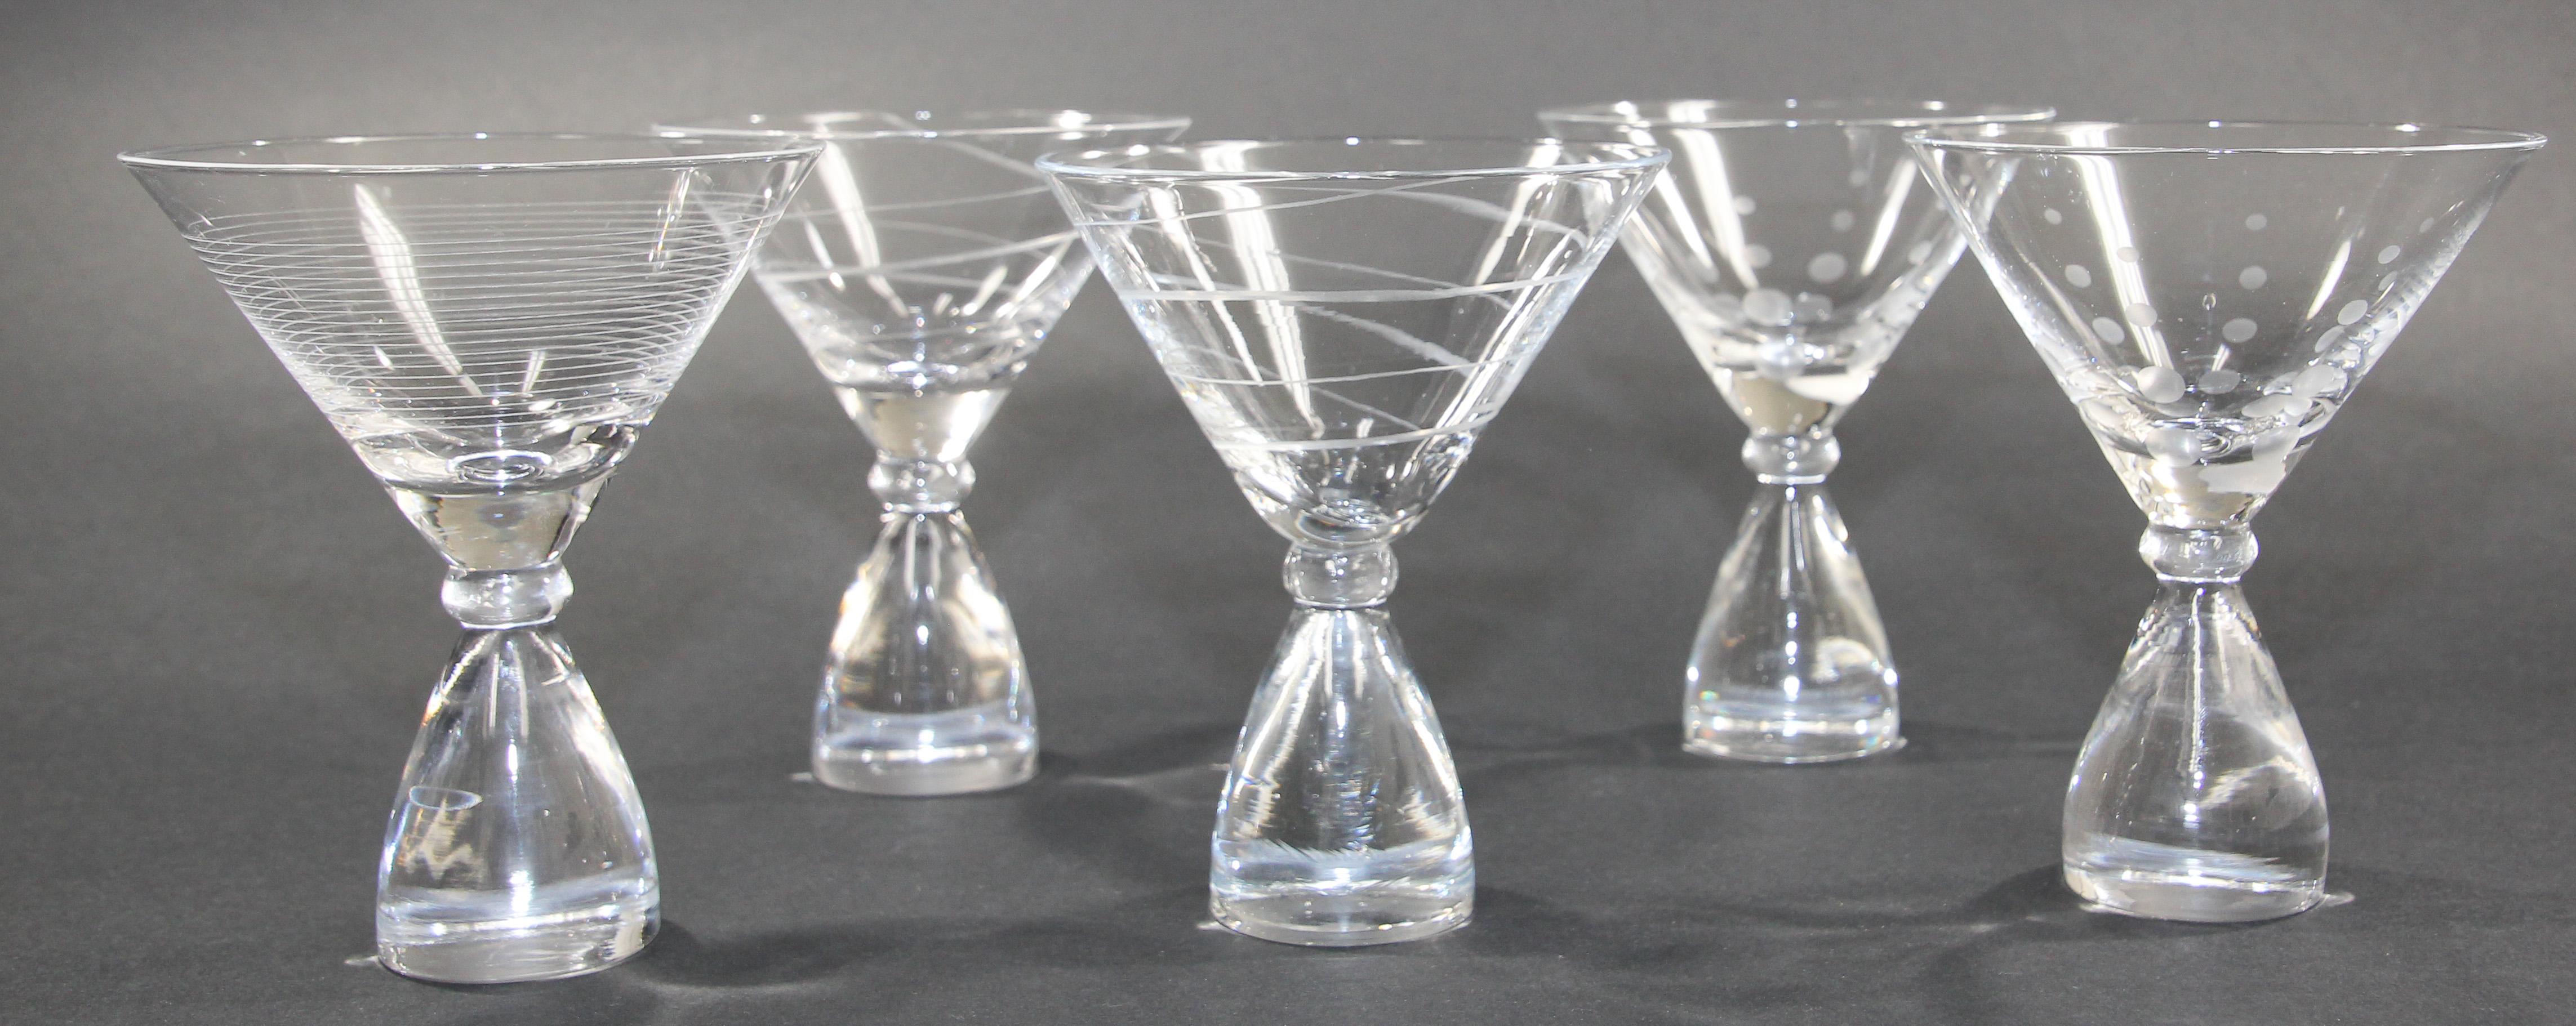 Vintage Martini Crystal Glasses Set of 5 7